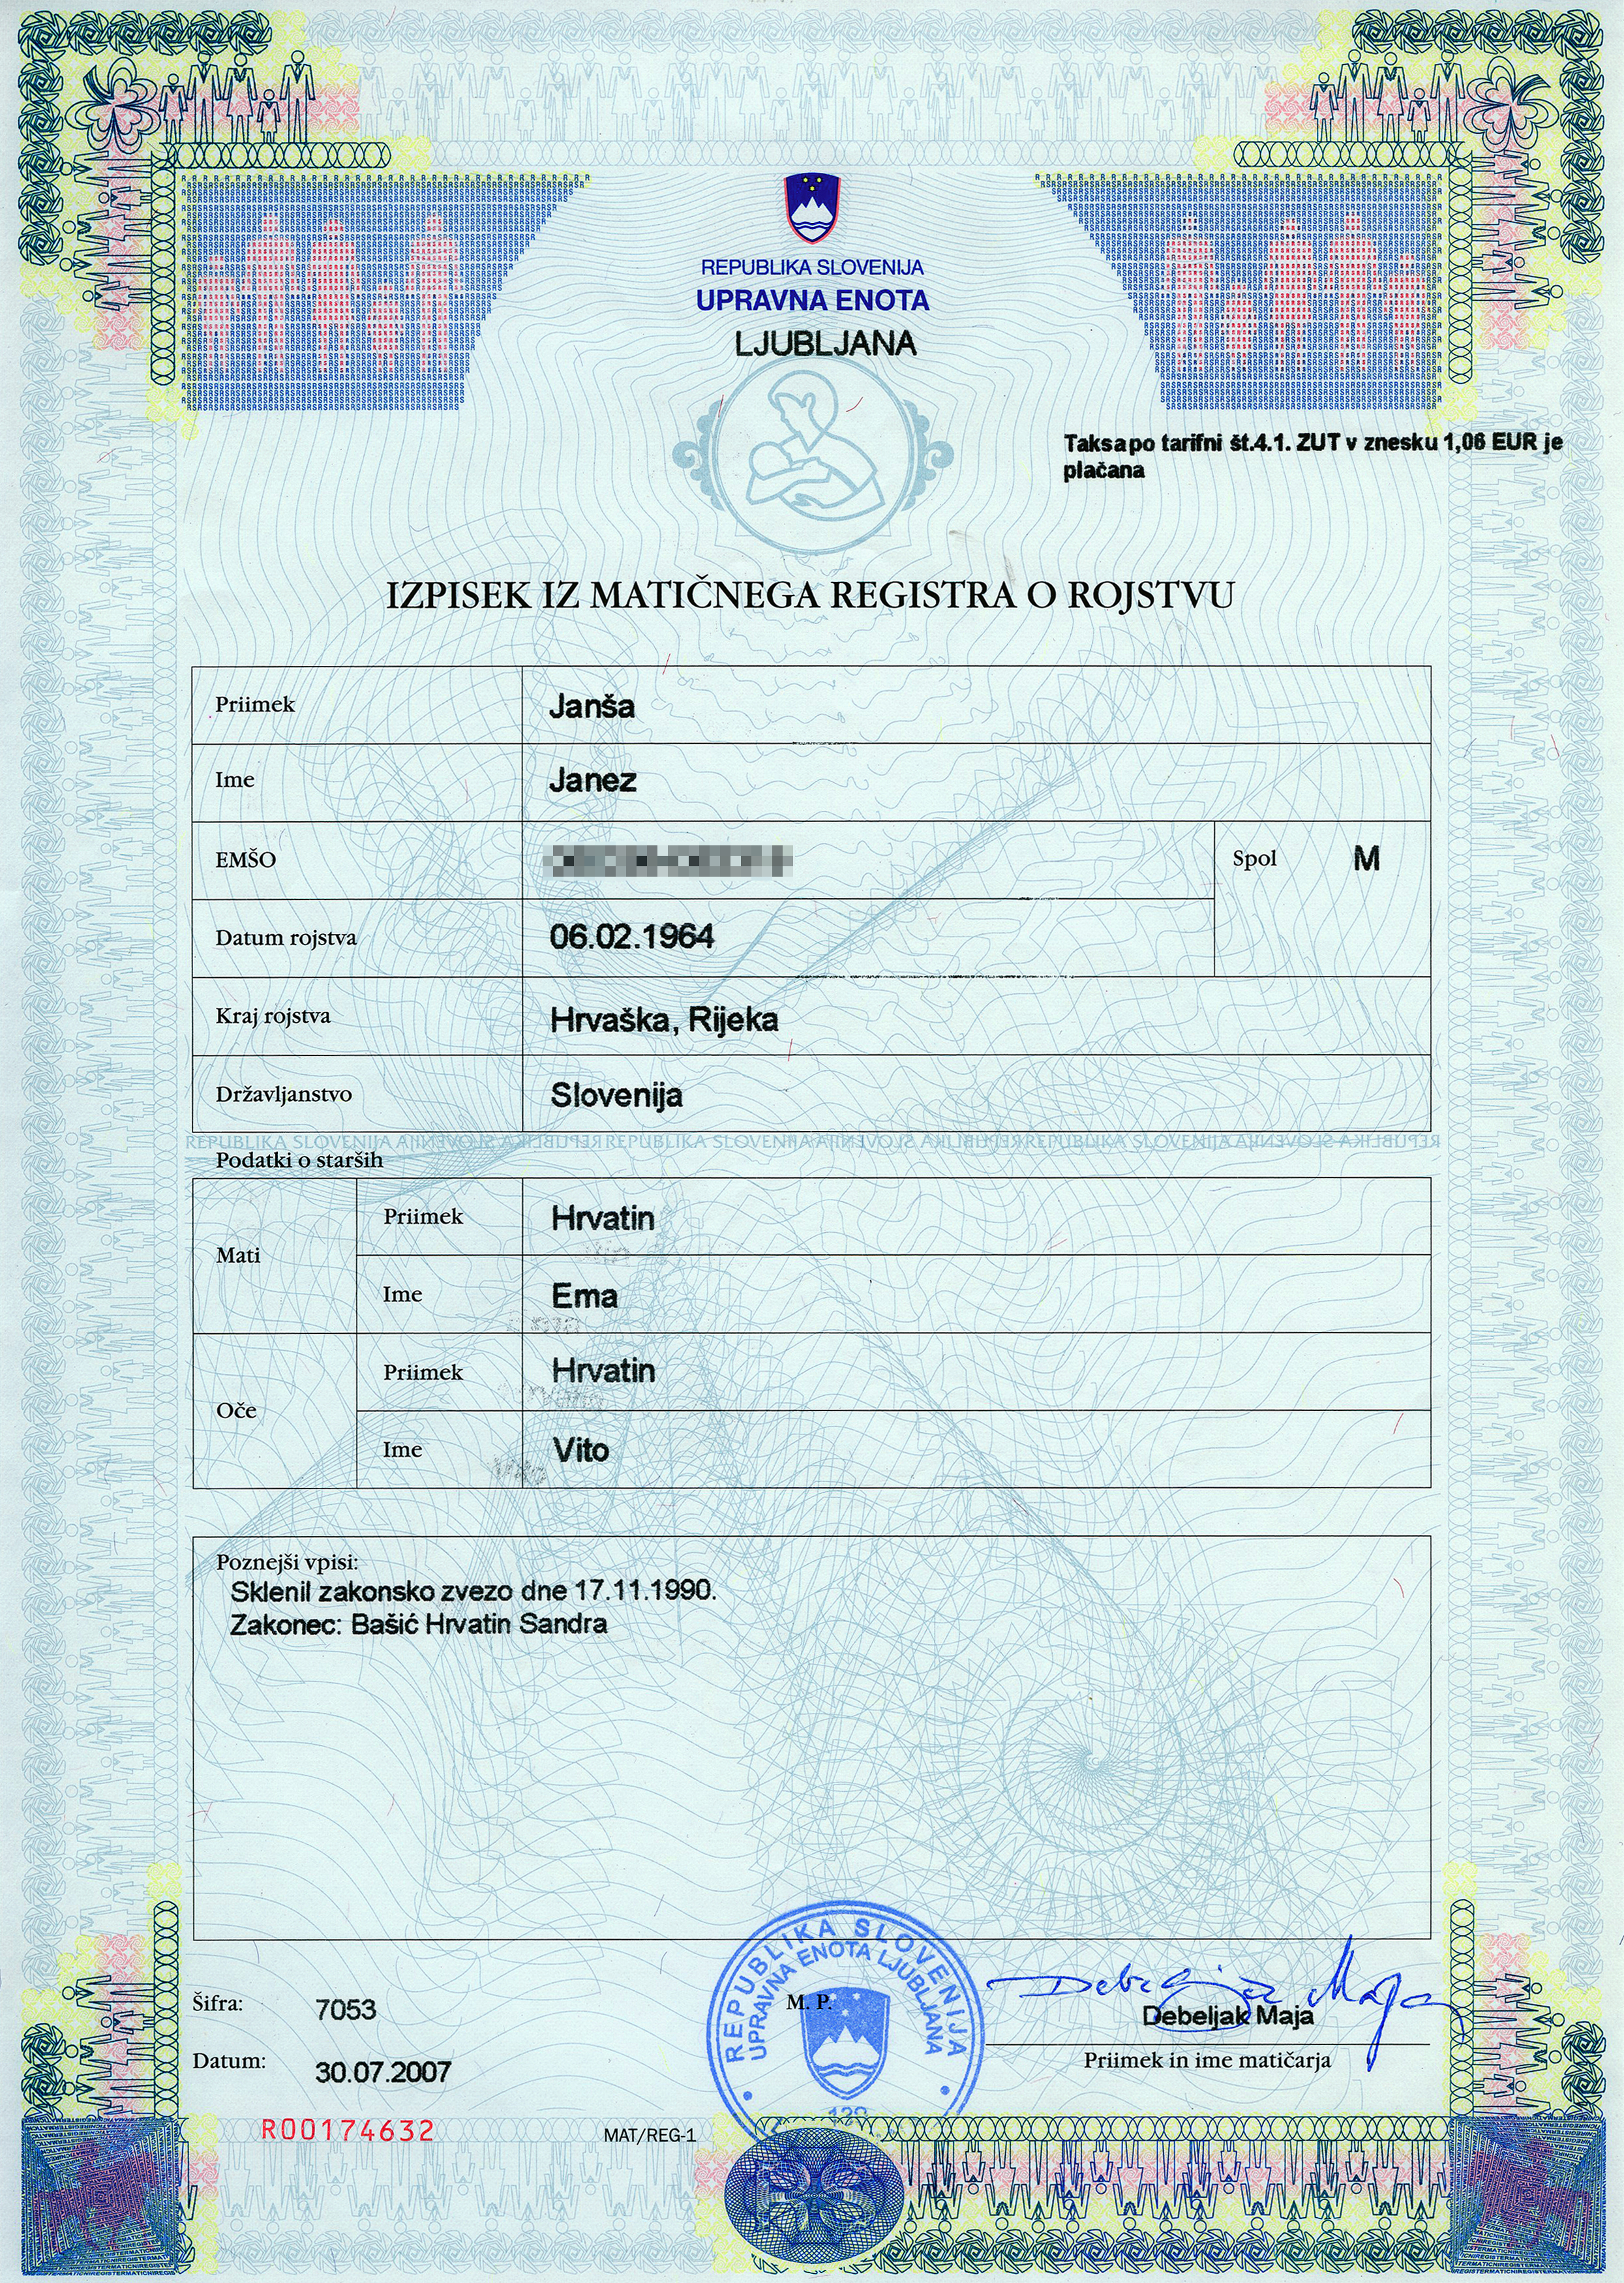 Birth Certificate Janez Jansa 1